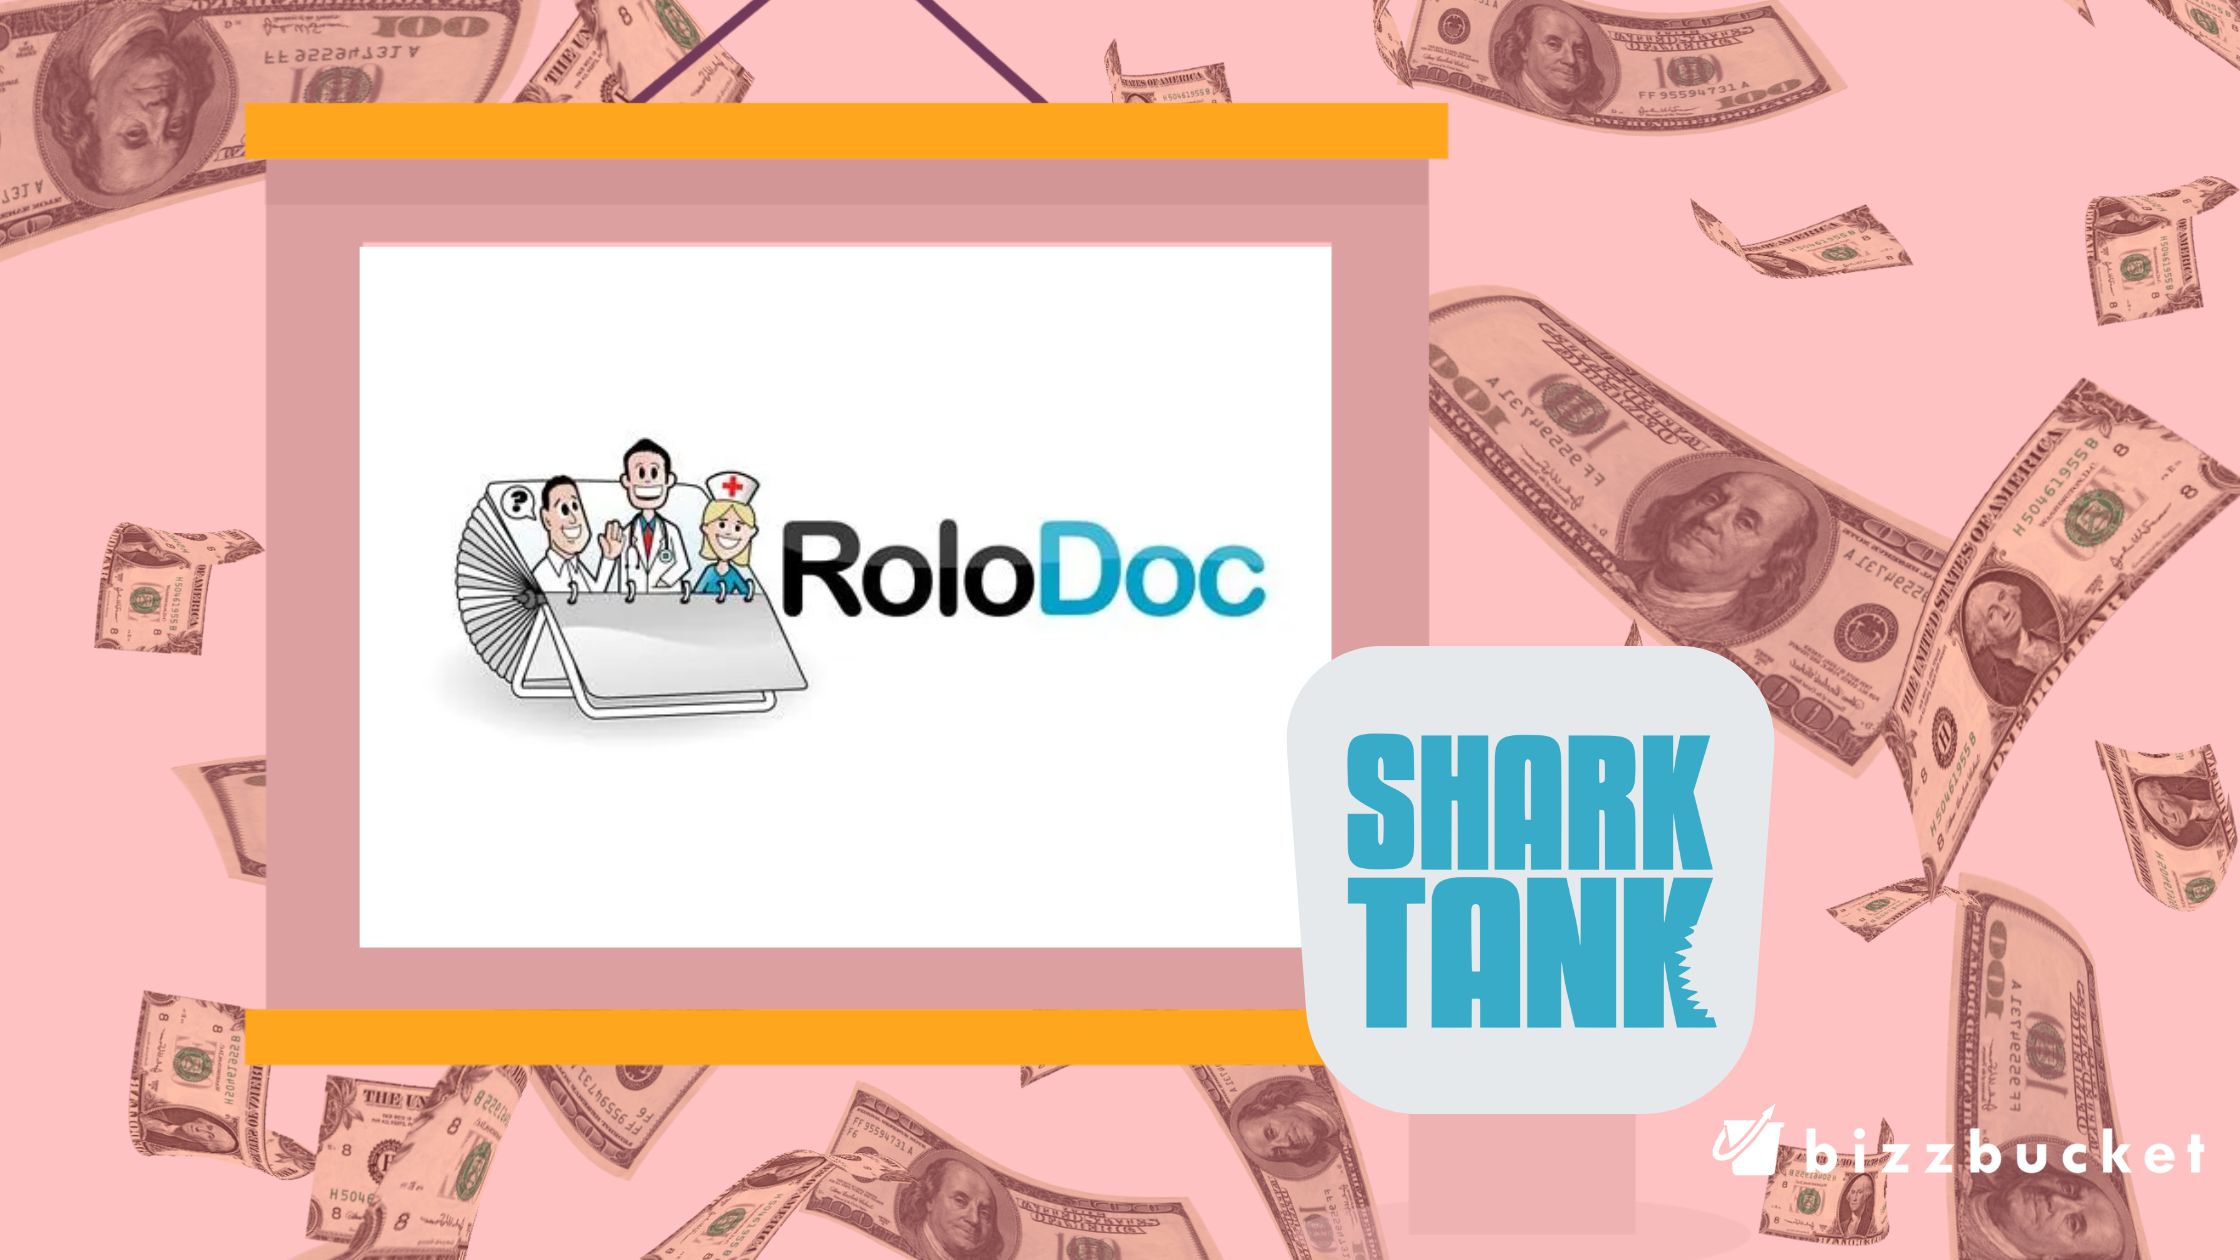 Rolodoc shark tank update